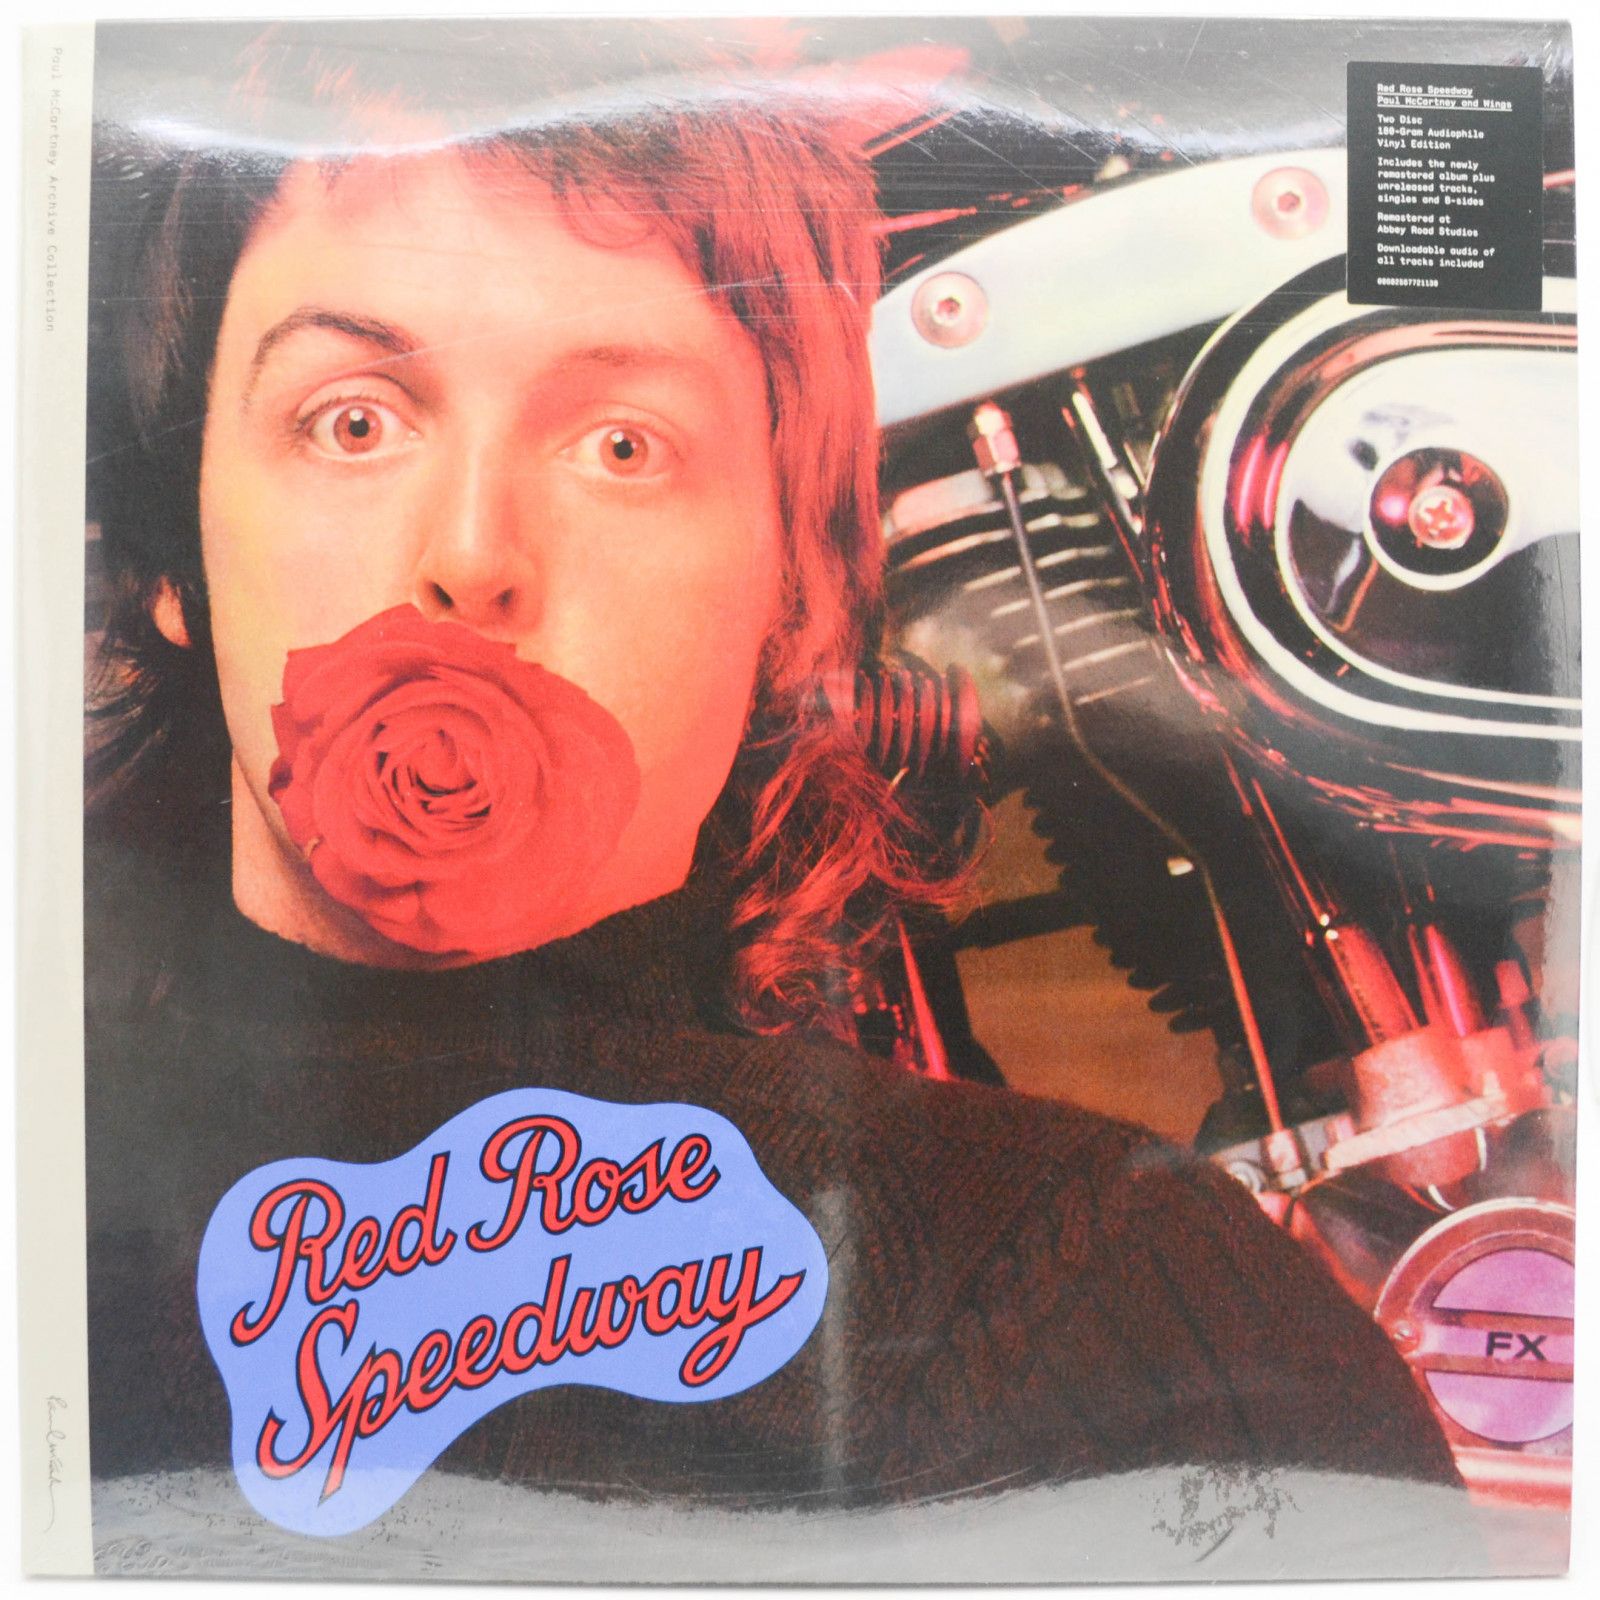 Paul McCartney & Wings — Red Rose Speedway (2LP), 1973